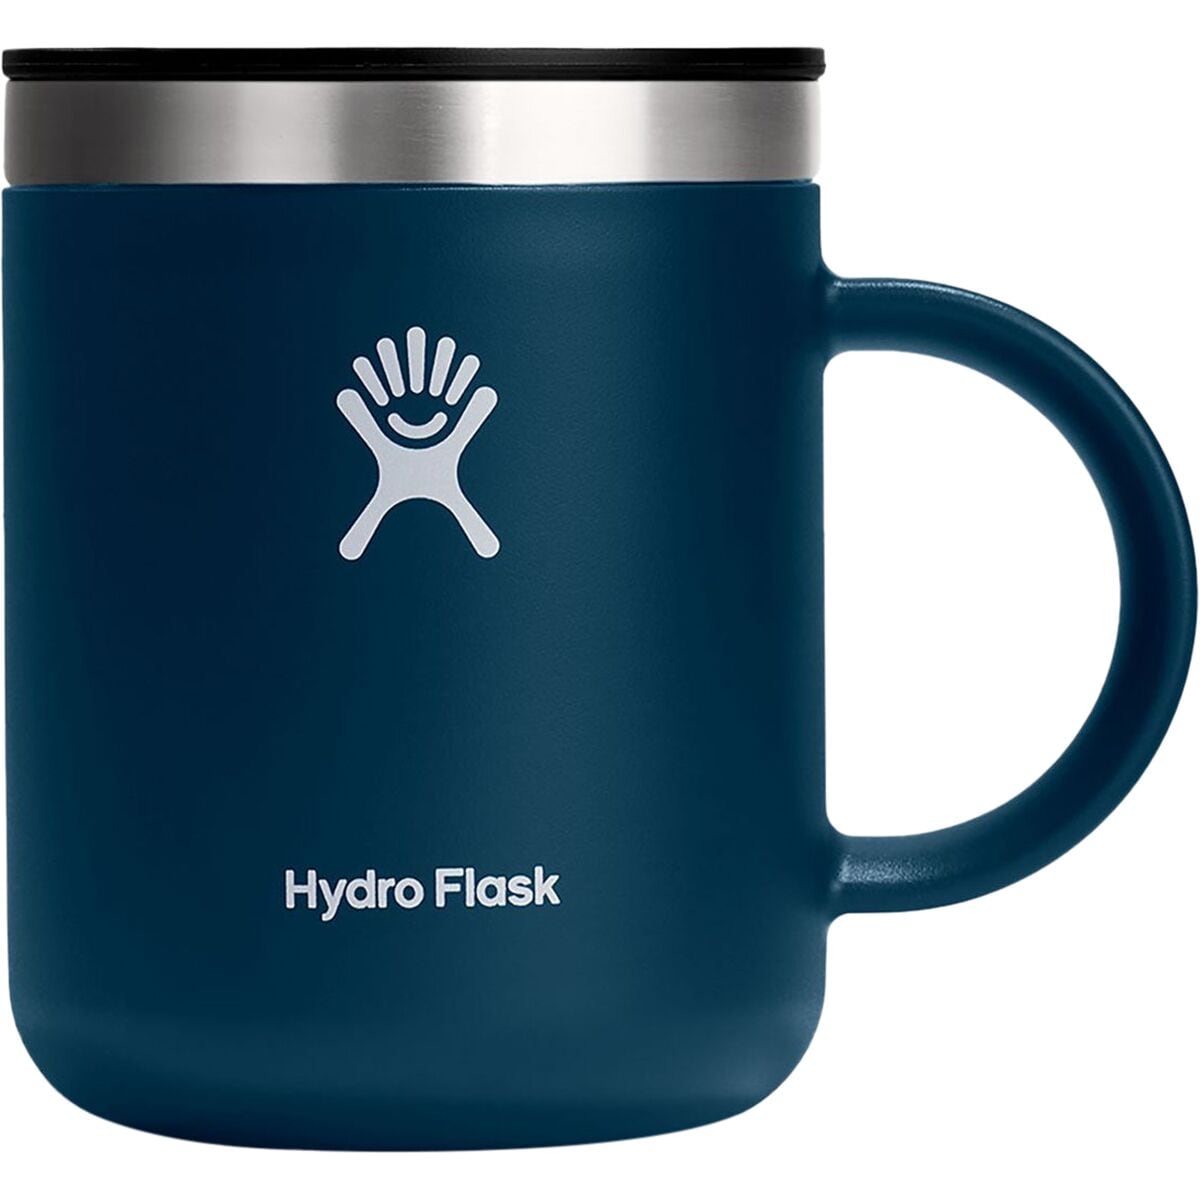 HYDRO FLASK 12 oz Coffee Mug